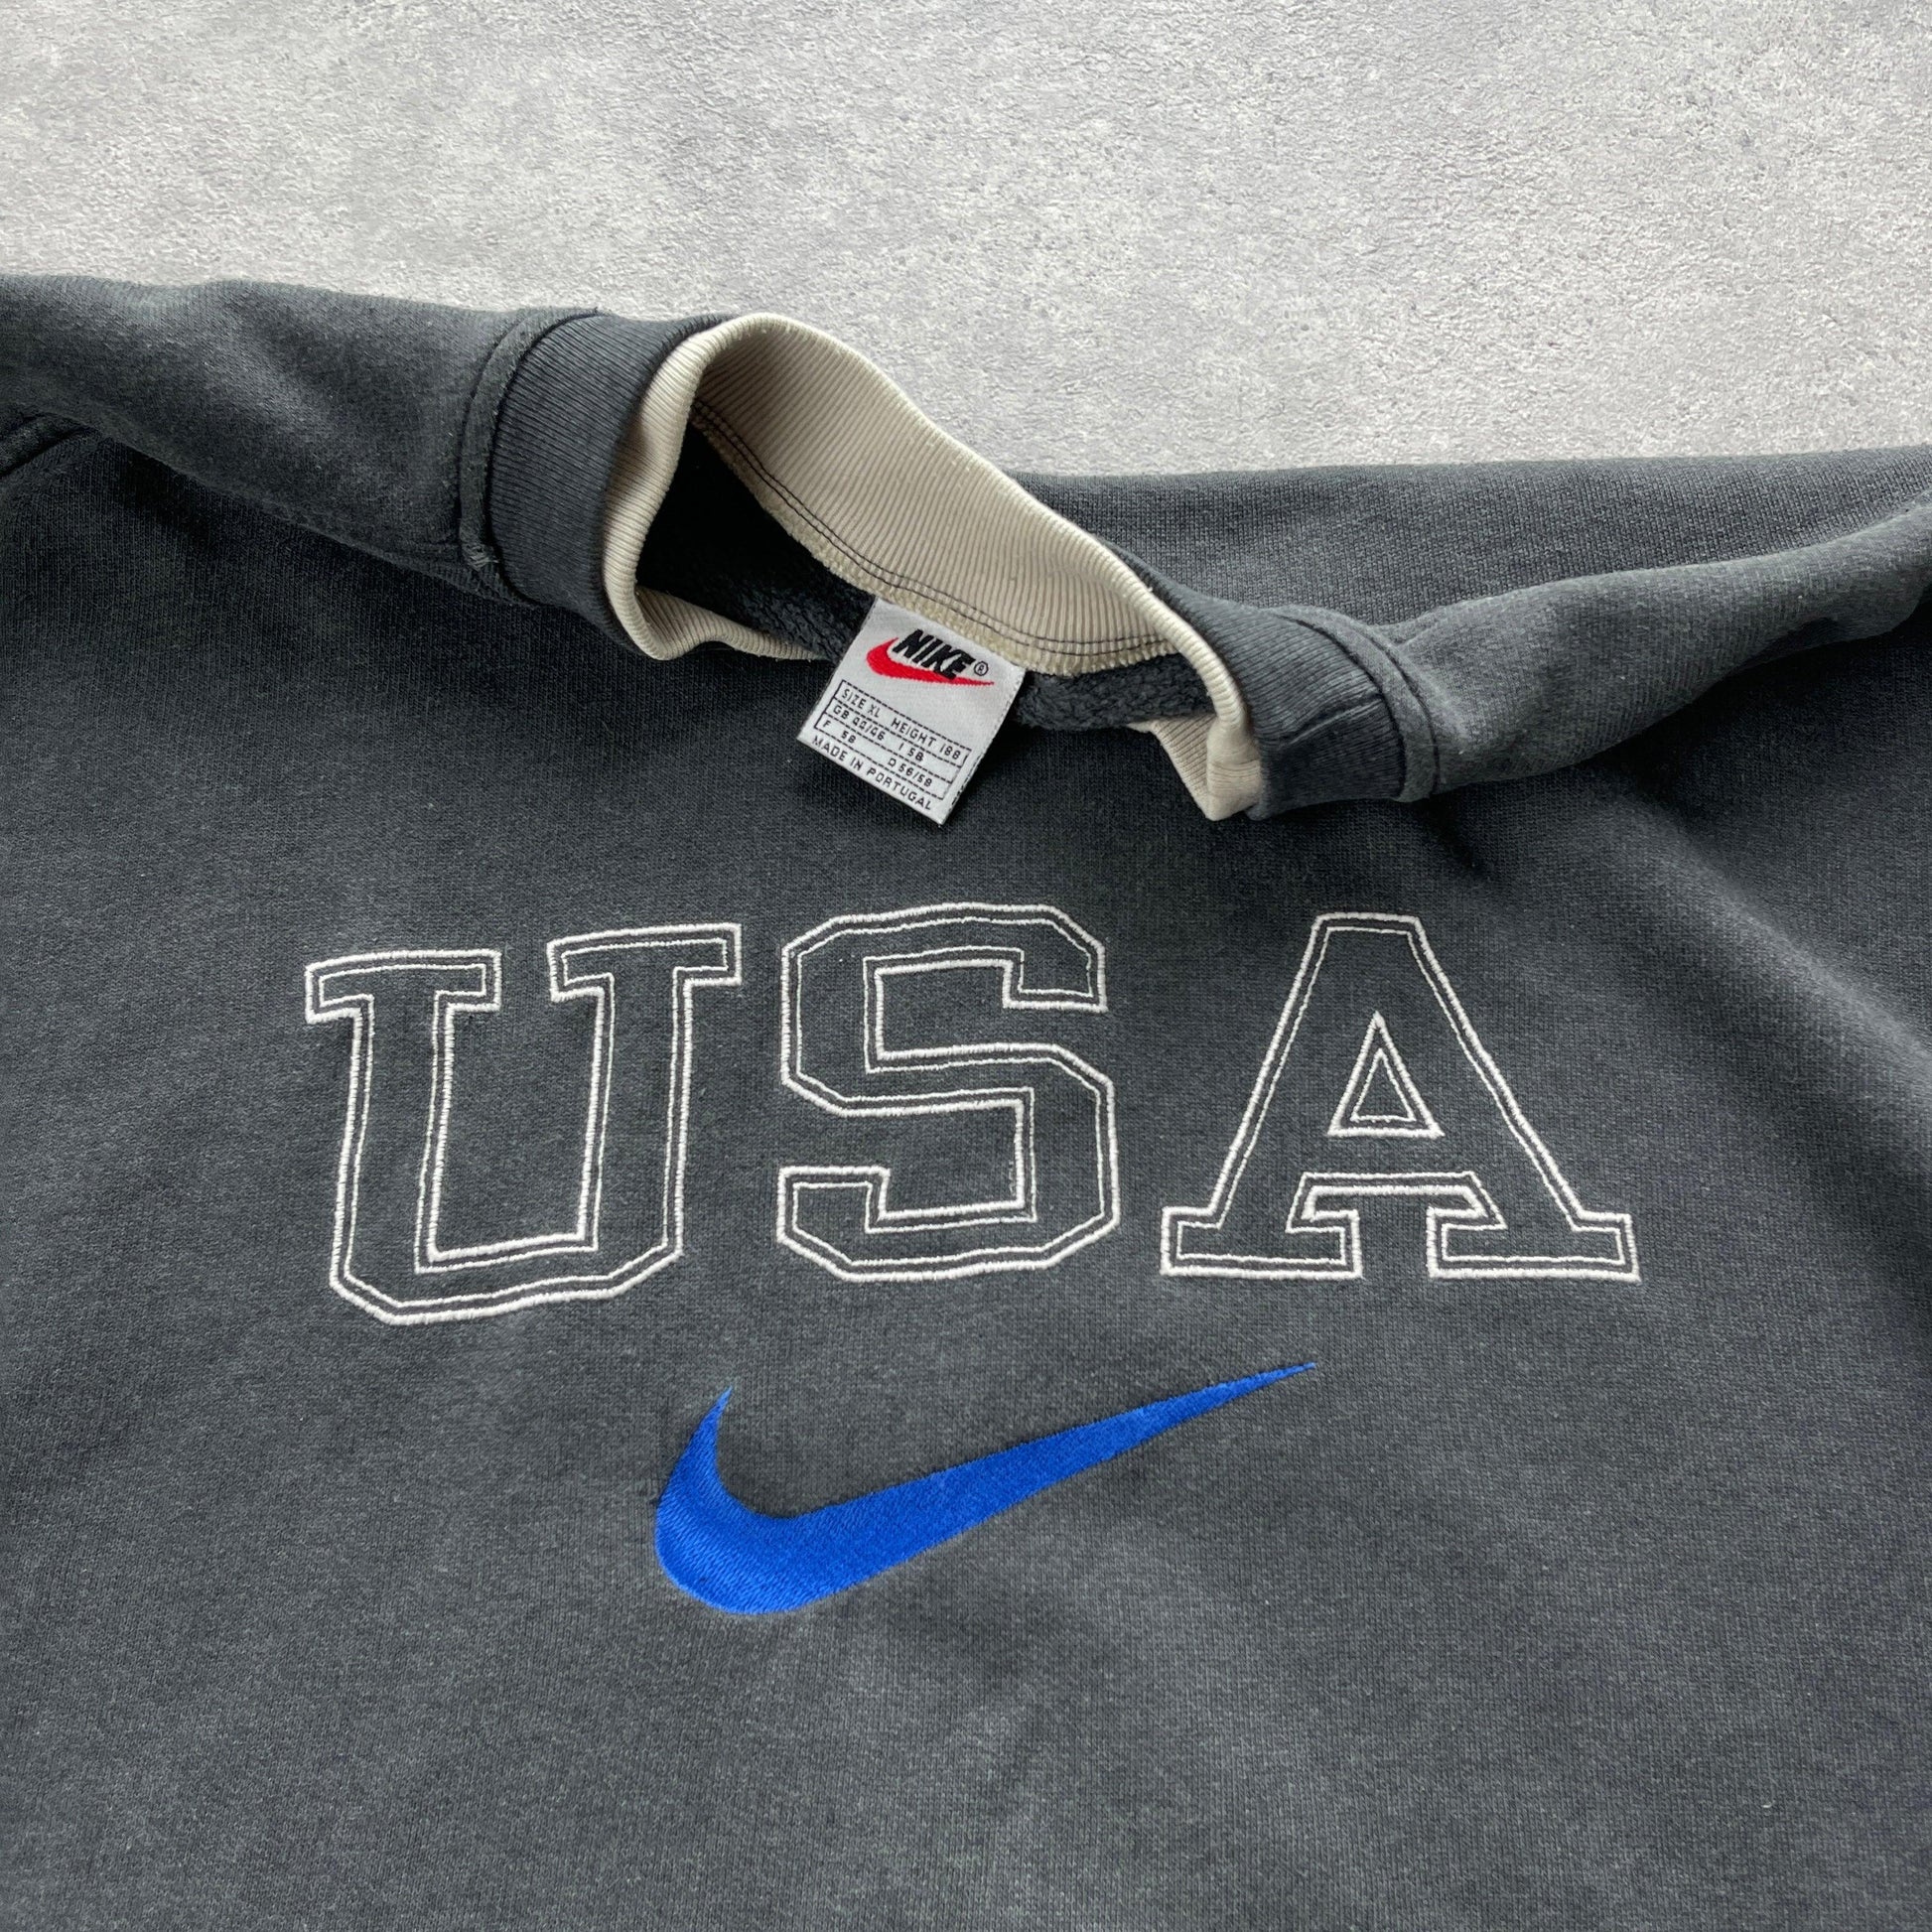 Nike RARE 1990s heavyweight embroidered USA sweatshirt (XL) - Known Source